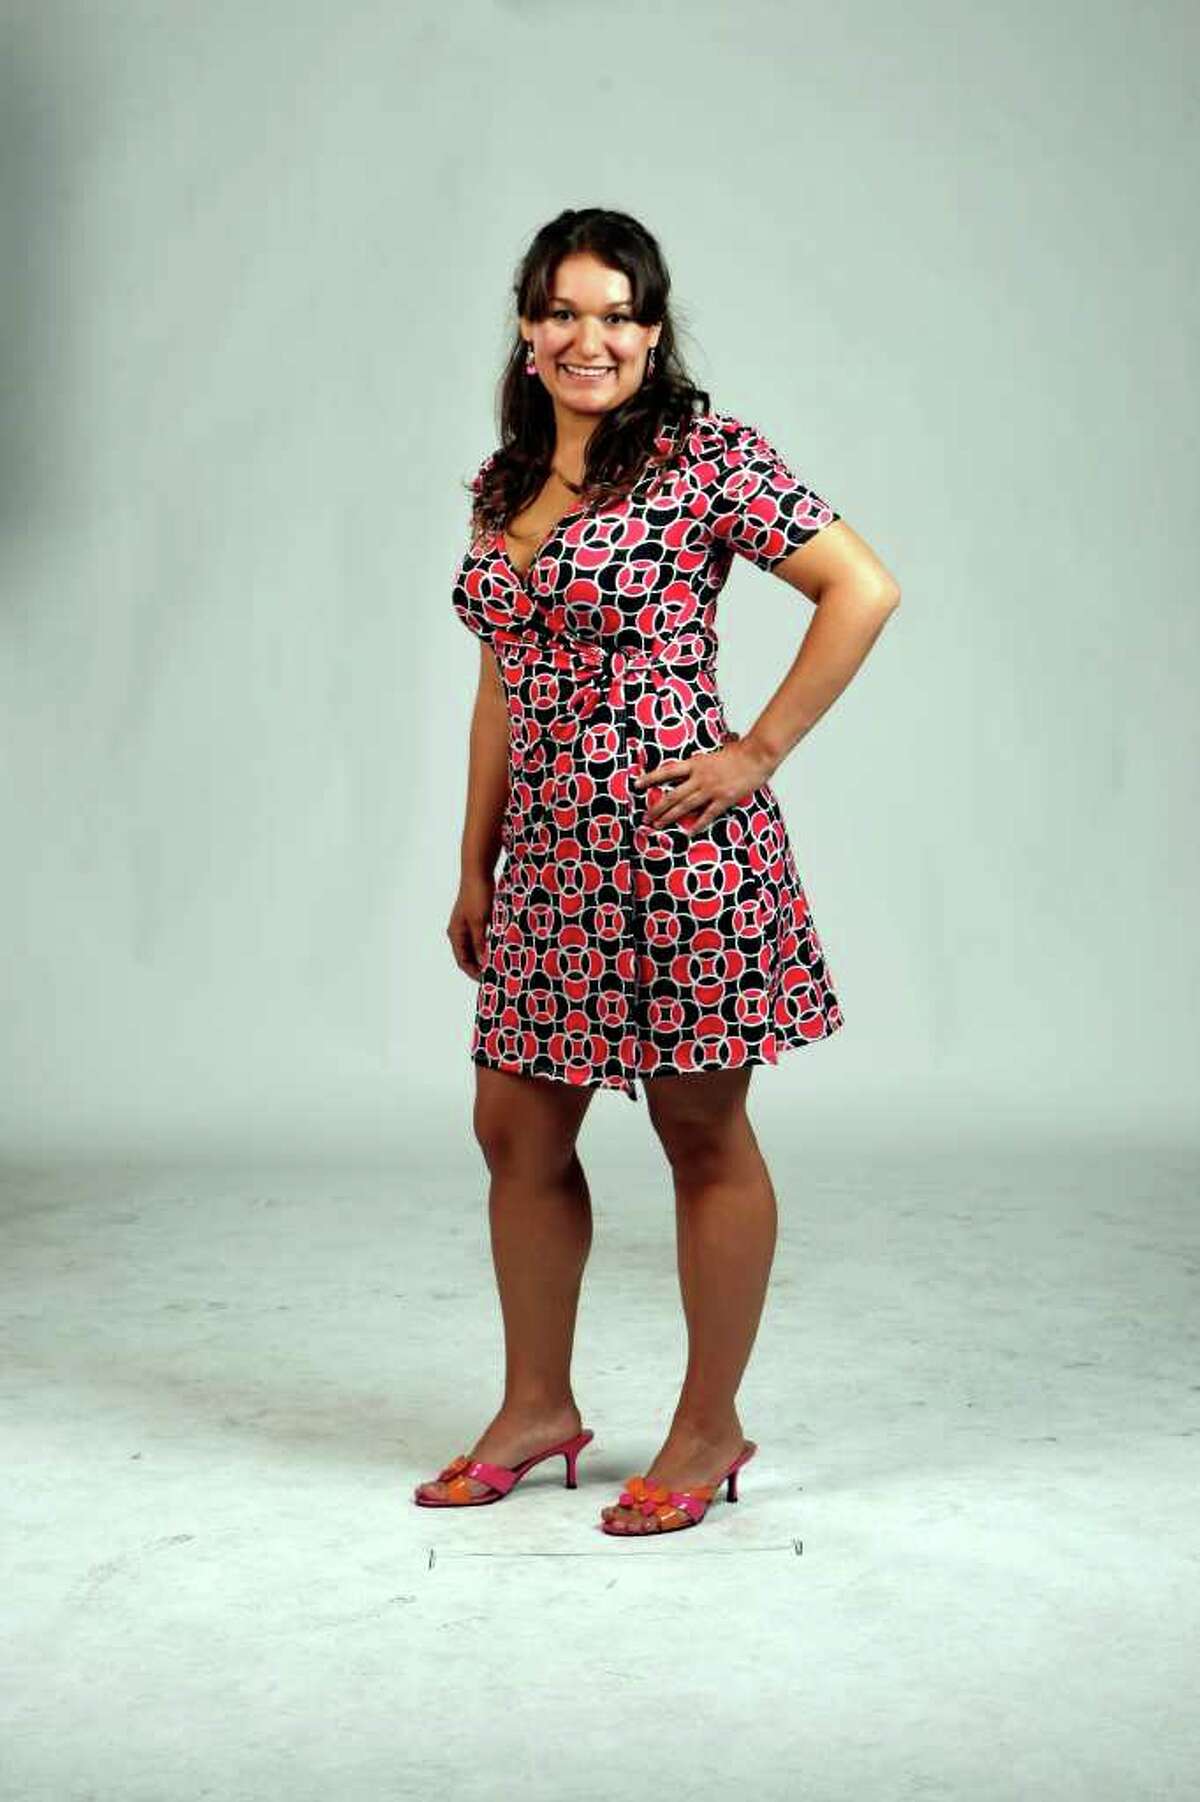 CONEXION: Karin Wedholm, 2011 Top 10 Hottest Latina contestants. Photographed Sunday April 10, 2011 HELEN L. MONTOYA/hmontoya@express-news.net